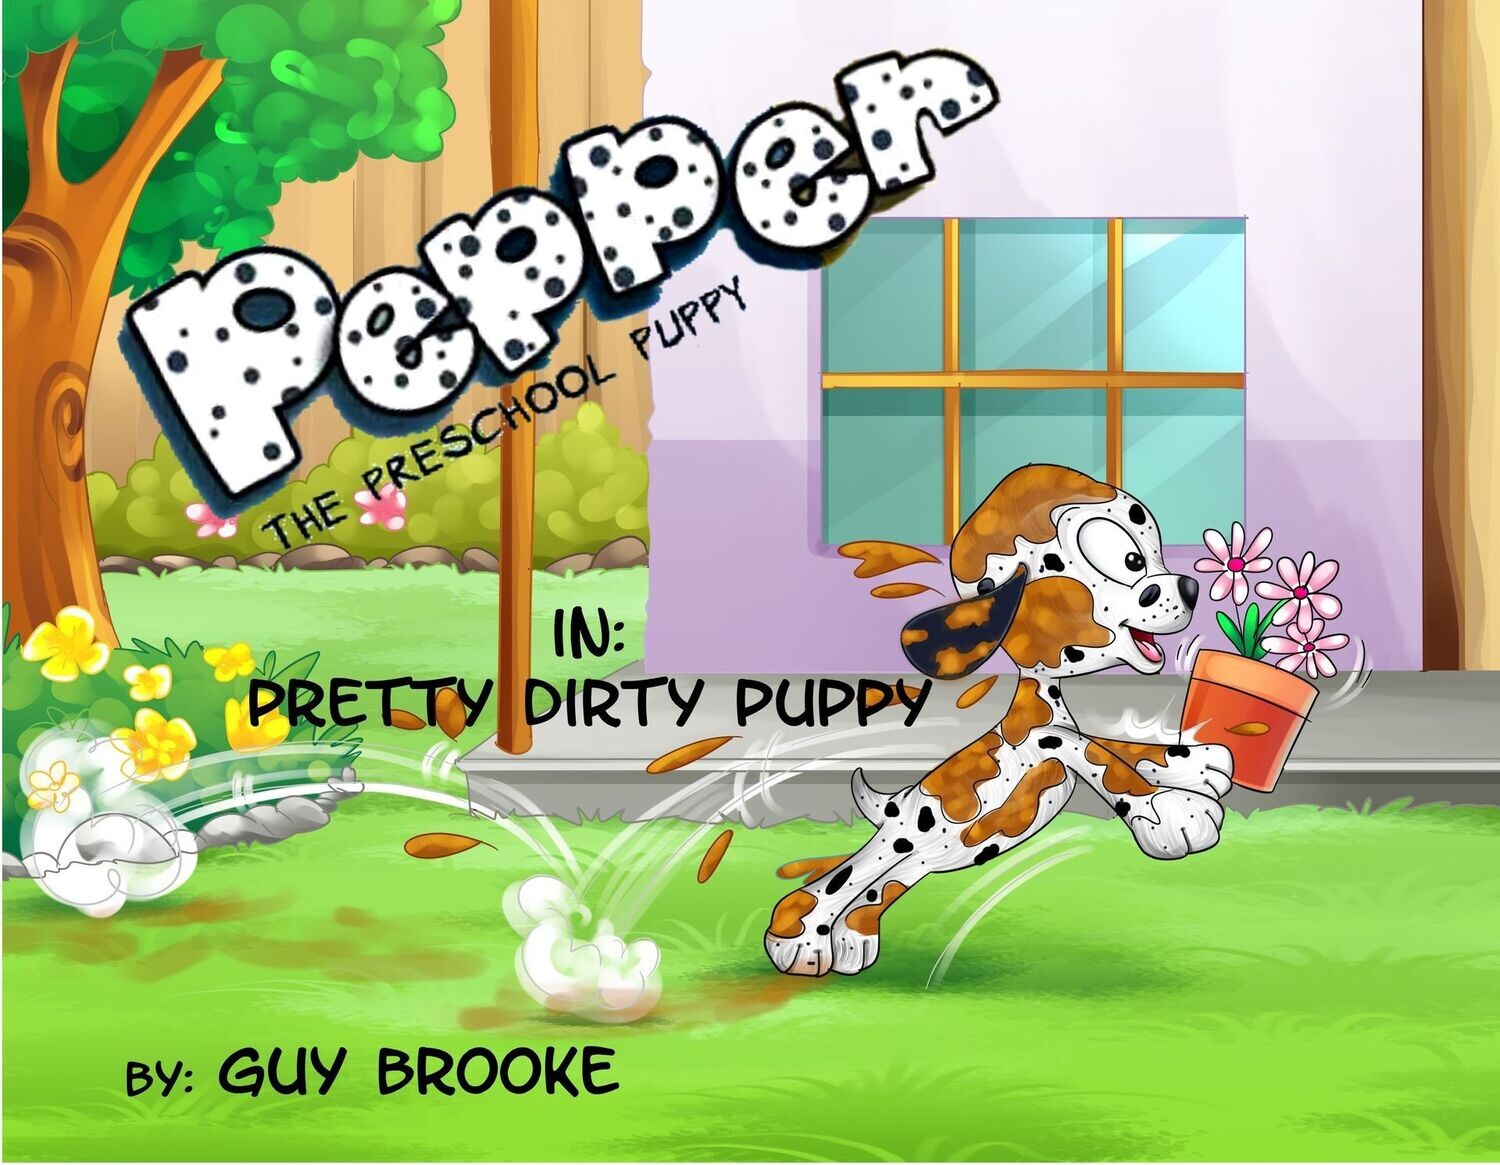 Pepper the Preschool Puppy - Pretty Dirty Puppy